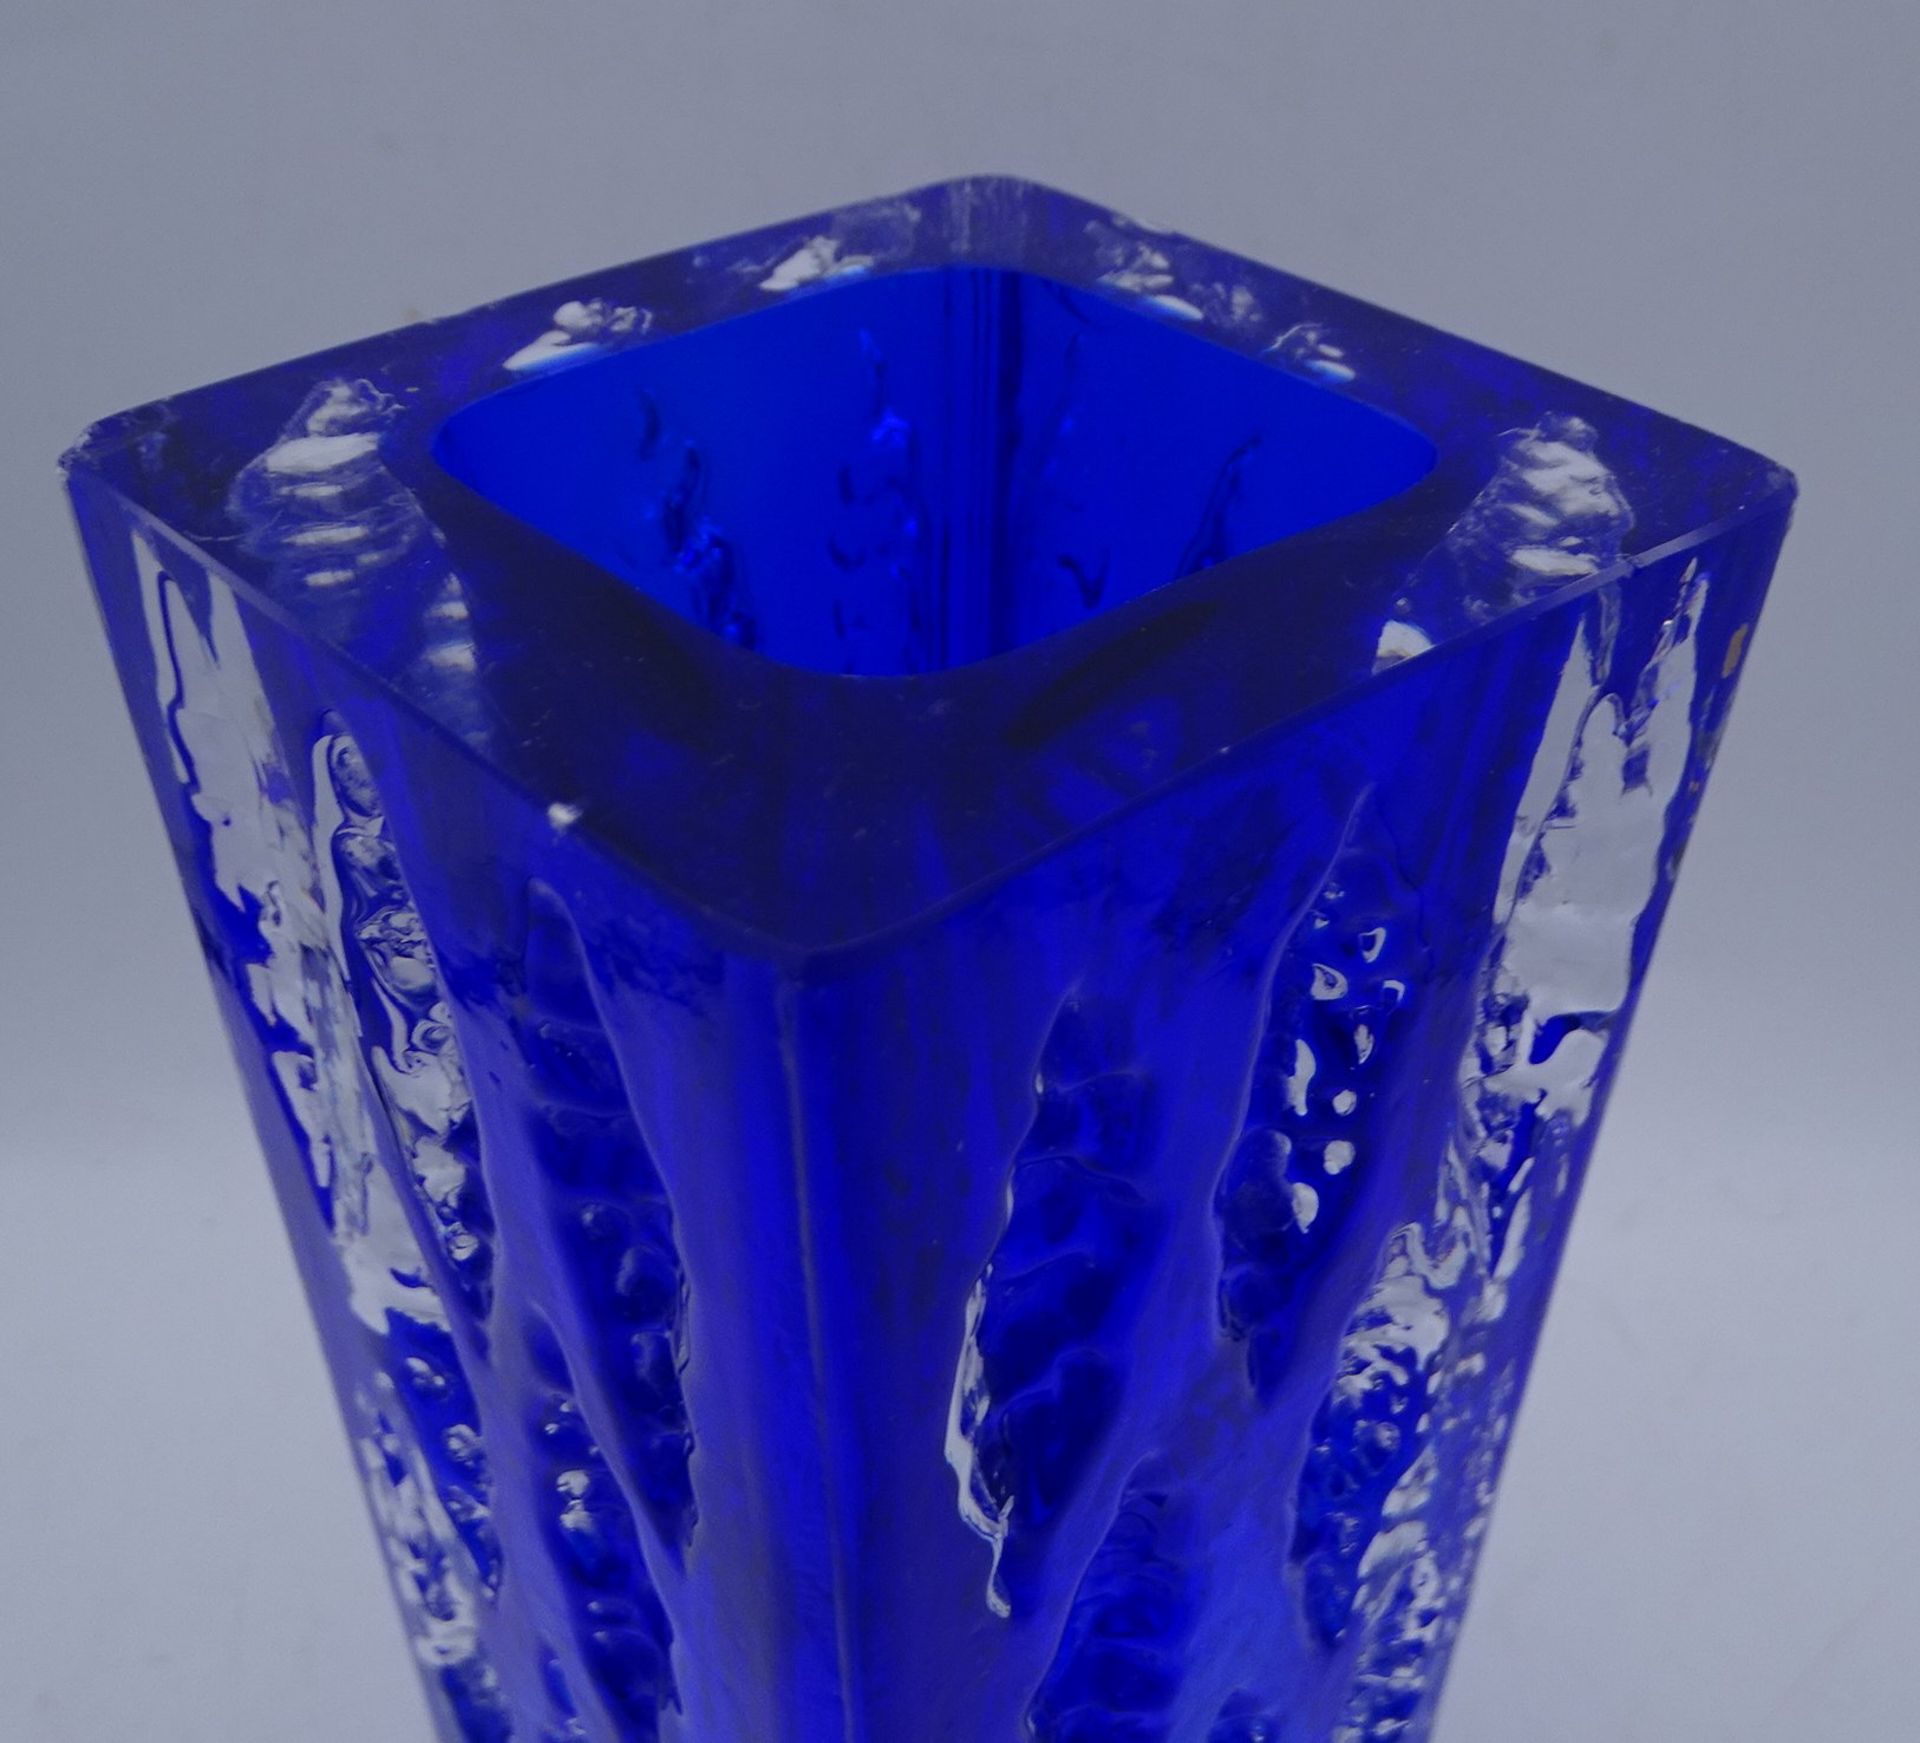 blau/klare dicke Kunstglasvase, H-18 cm, 8x8 cm, Rand oben mehrere kl. Abplatzer0 - Image 3 of 5